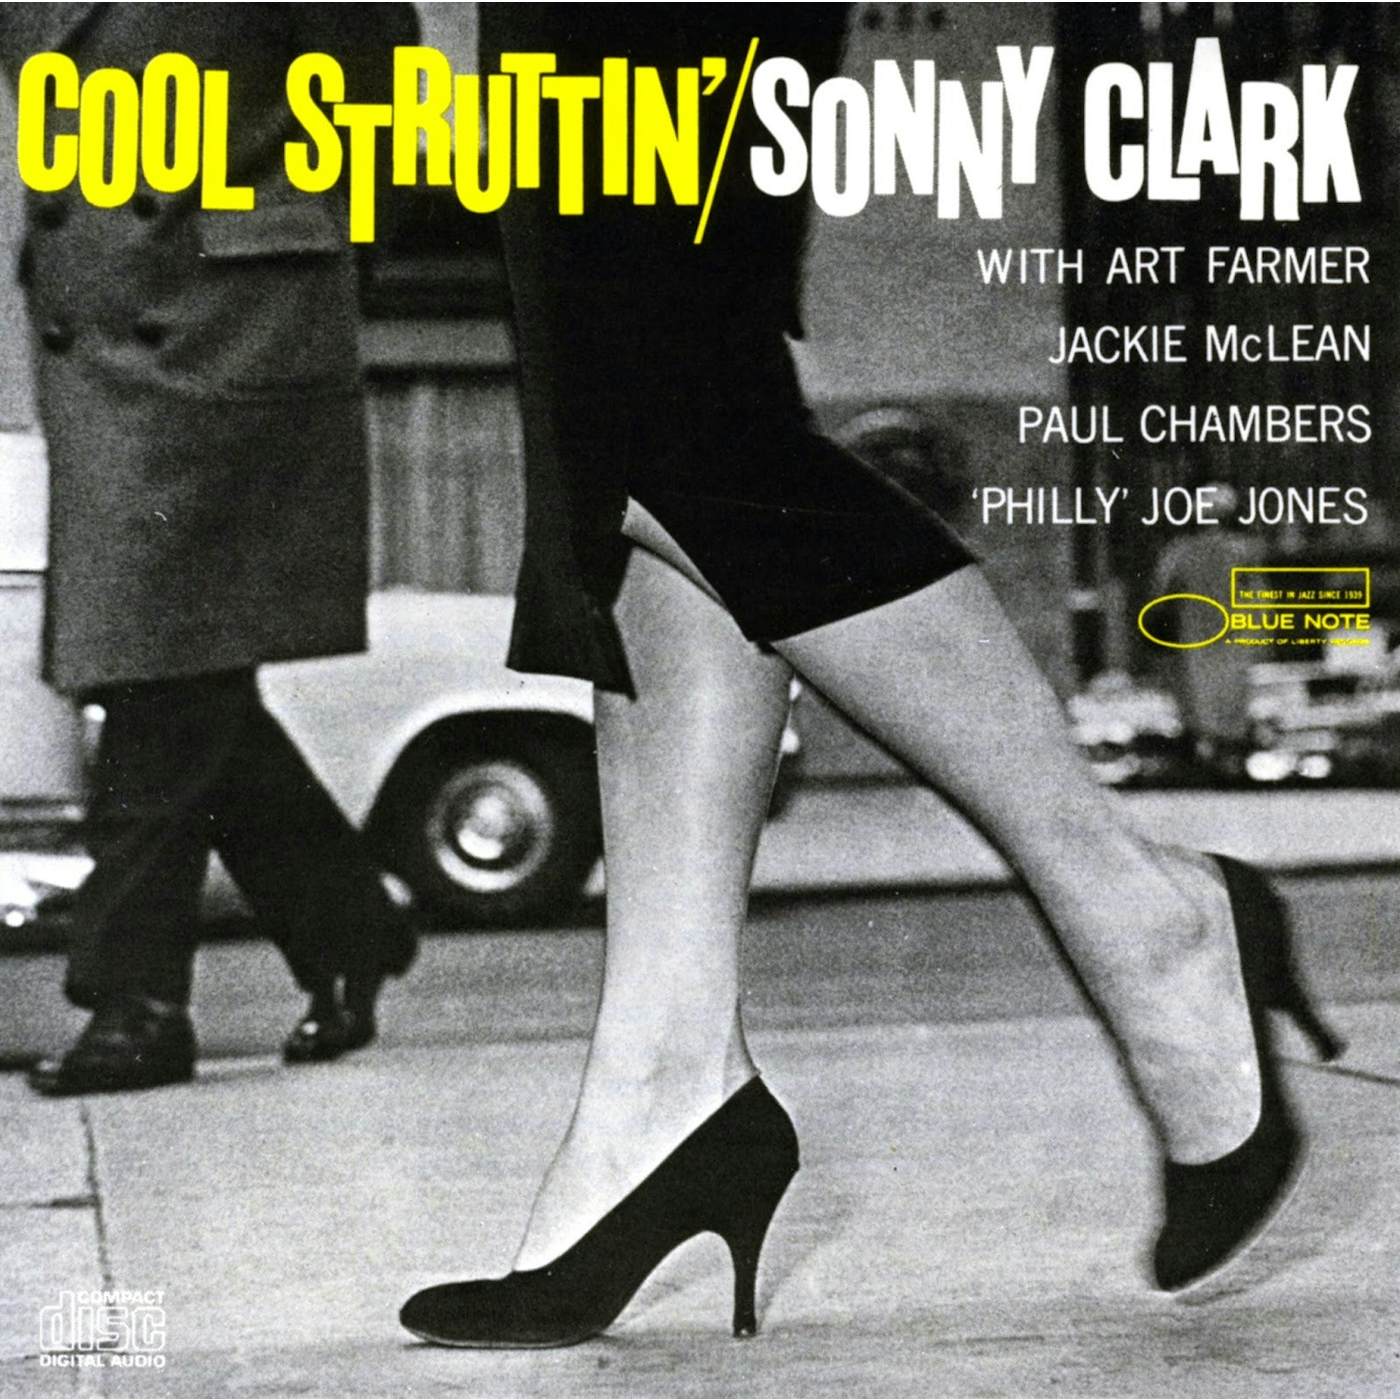 Sonny Clark  Cool Struttin'